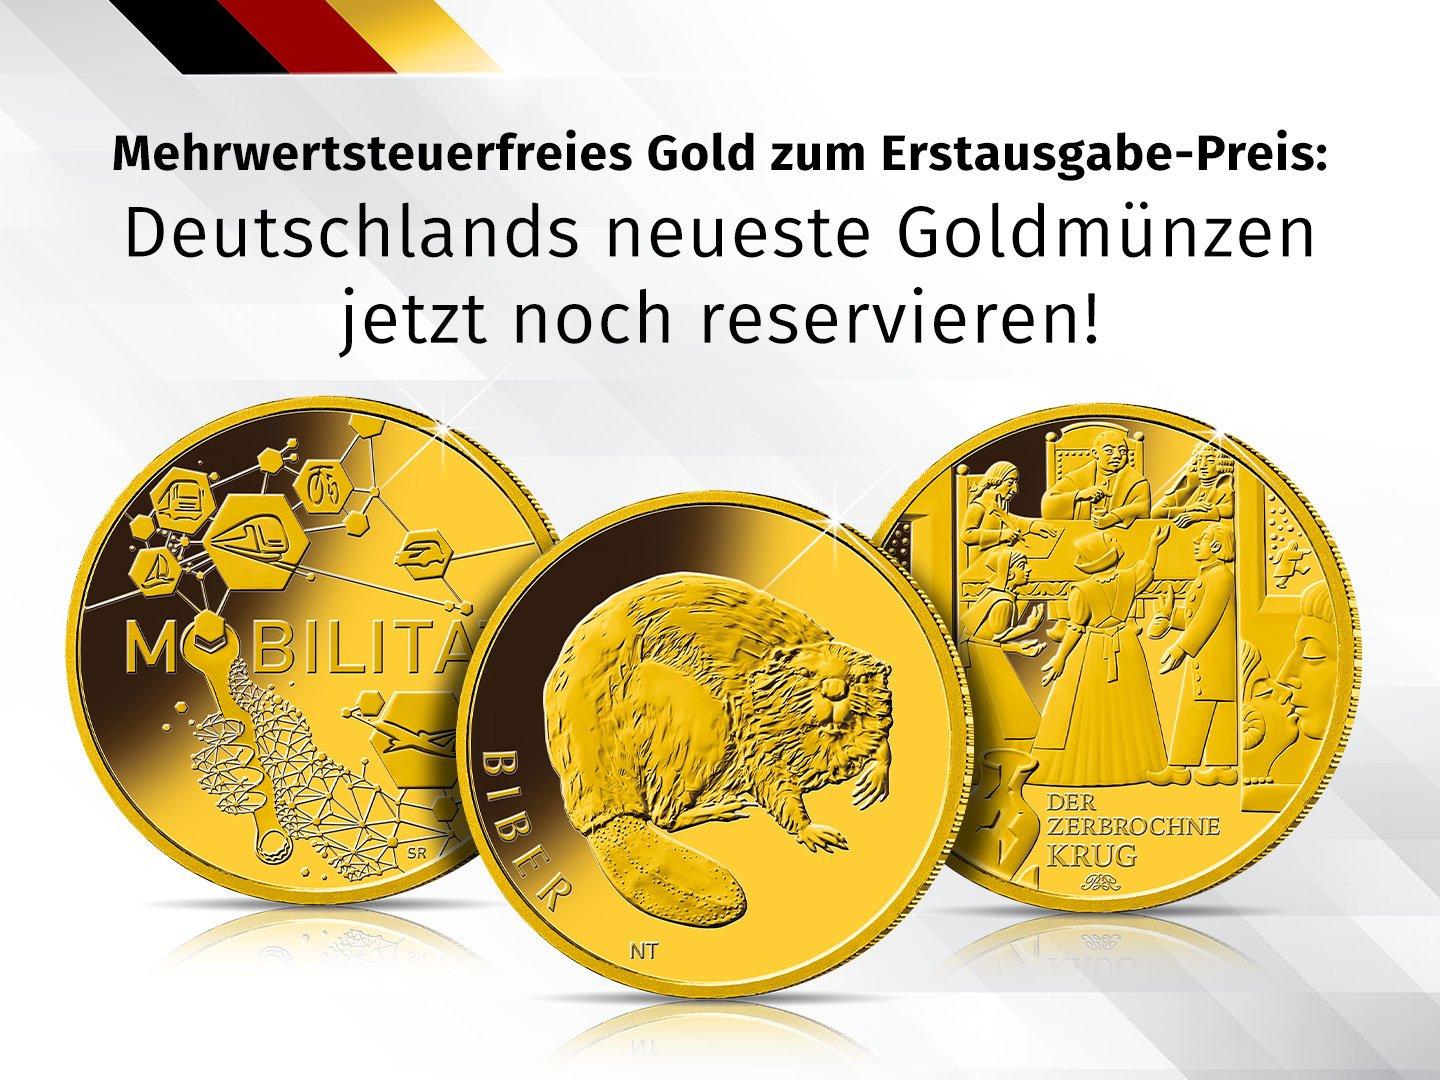 Deutsche Goldmünzen